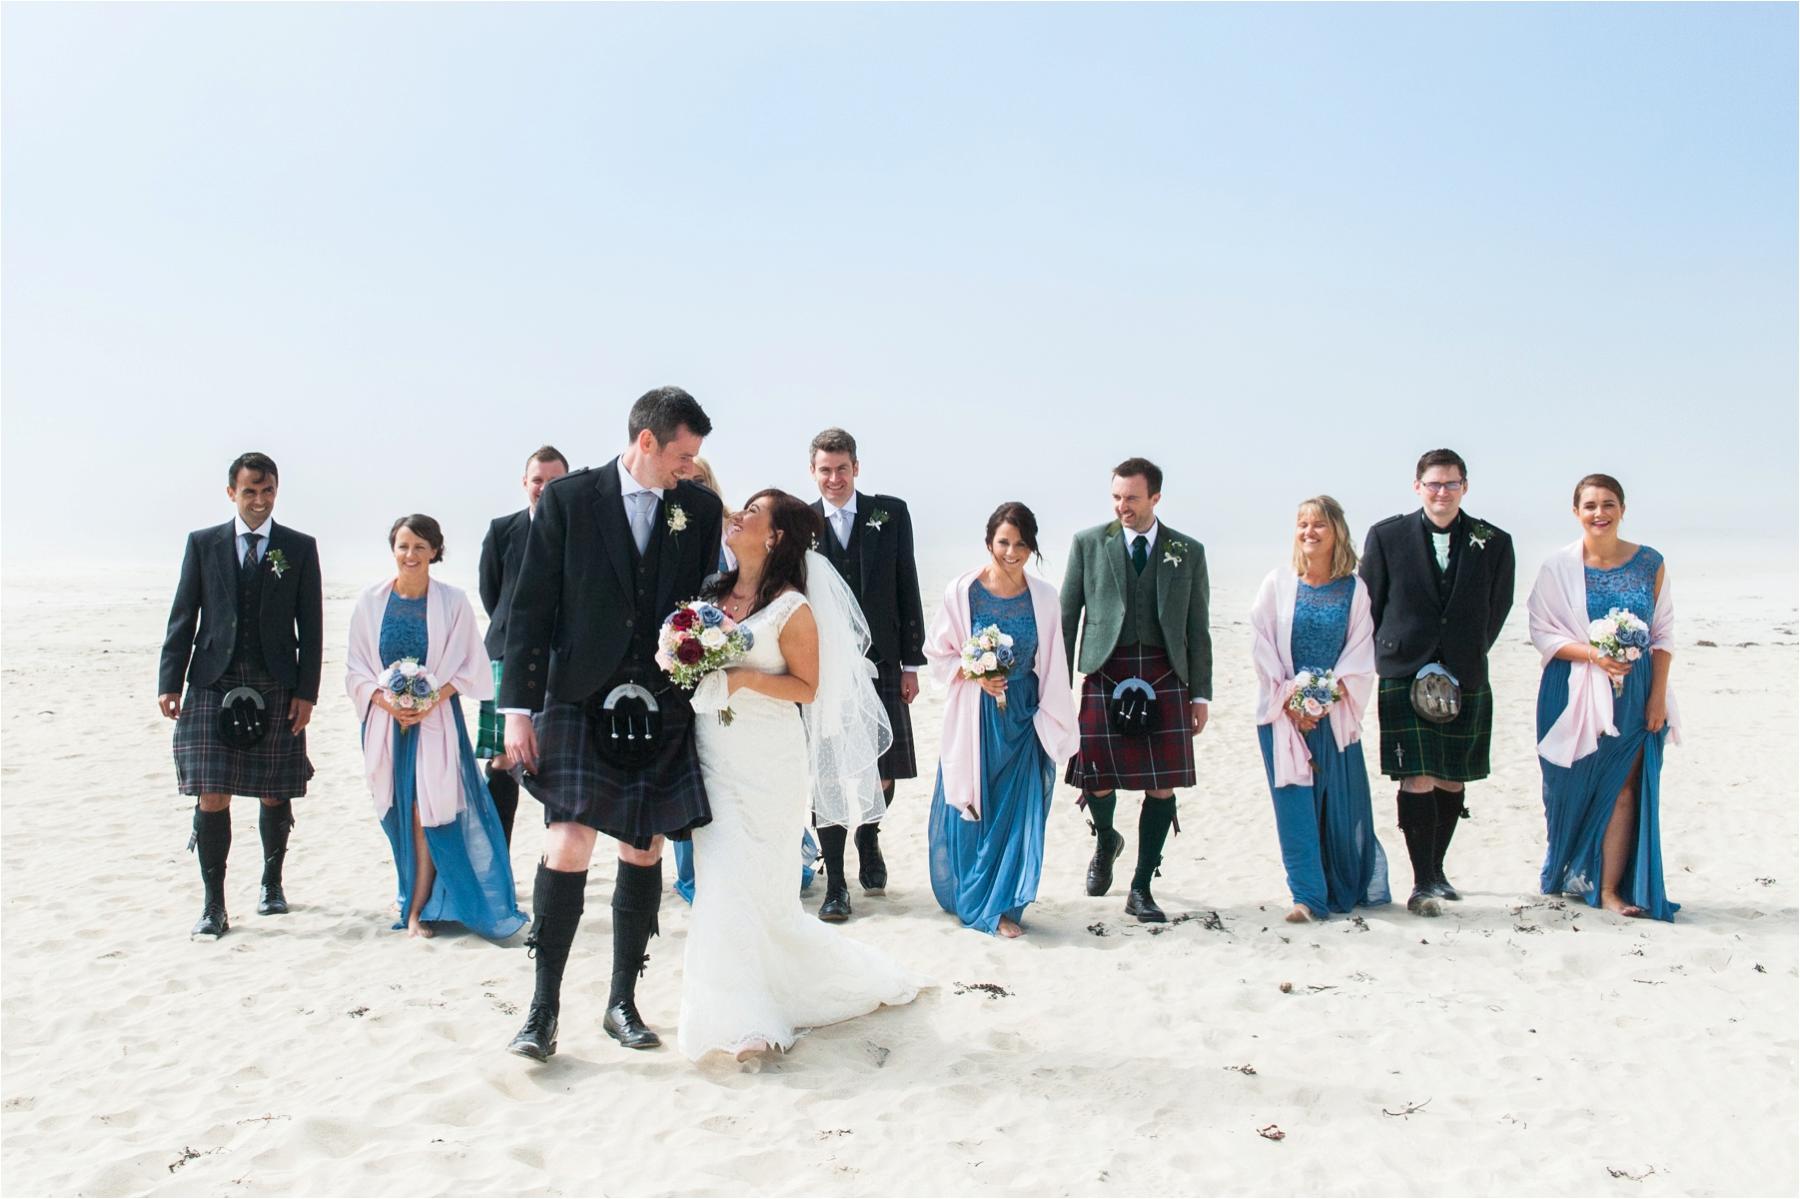 Bridal party celebrate at a beach wedding on the Isle of Harris. Photographer: Margaret Soraya